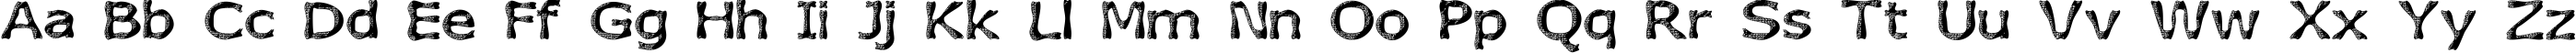 Пример написания английского алфавита шрифтом Heavy Texture